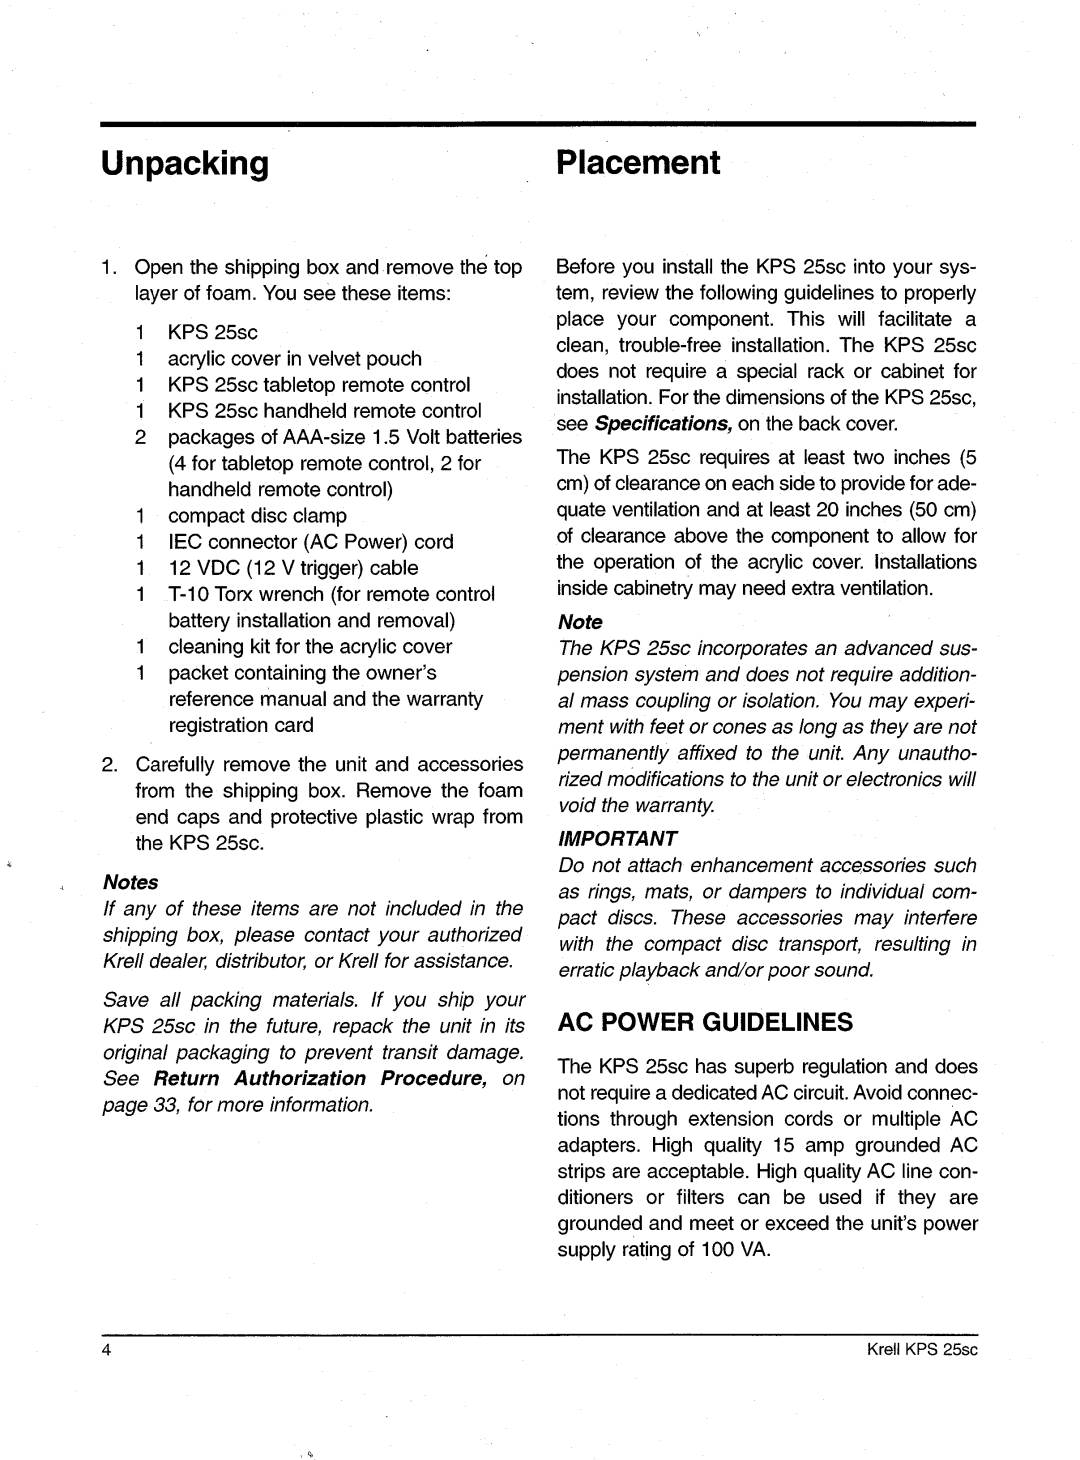 Krell Industries KPS 25sc manual UnpackingPlacement, Ac Powerguidelines 